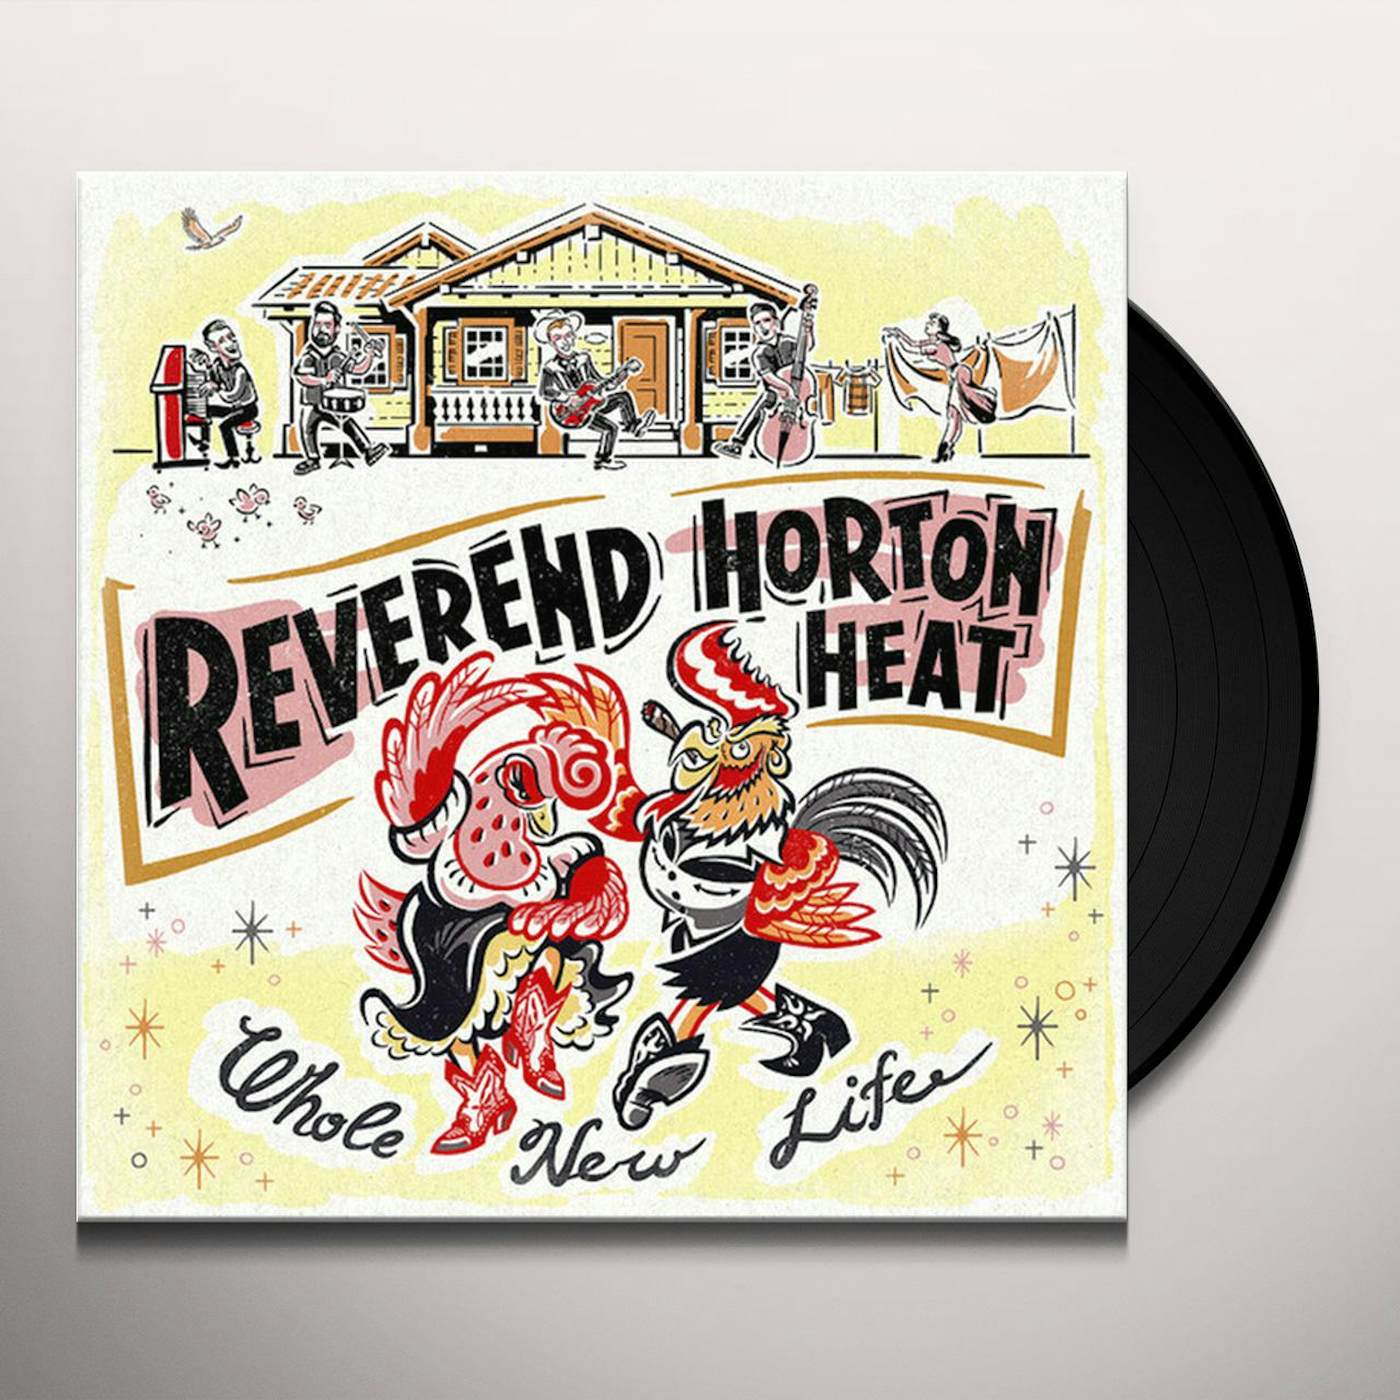 The Reverend Horton Heat Liquor in The Front LP (Crystal Vellum Vinyl)